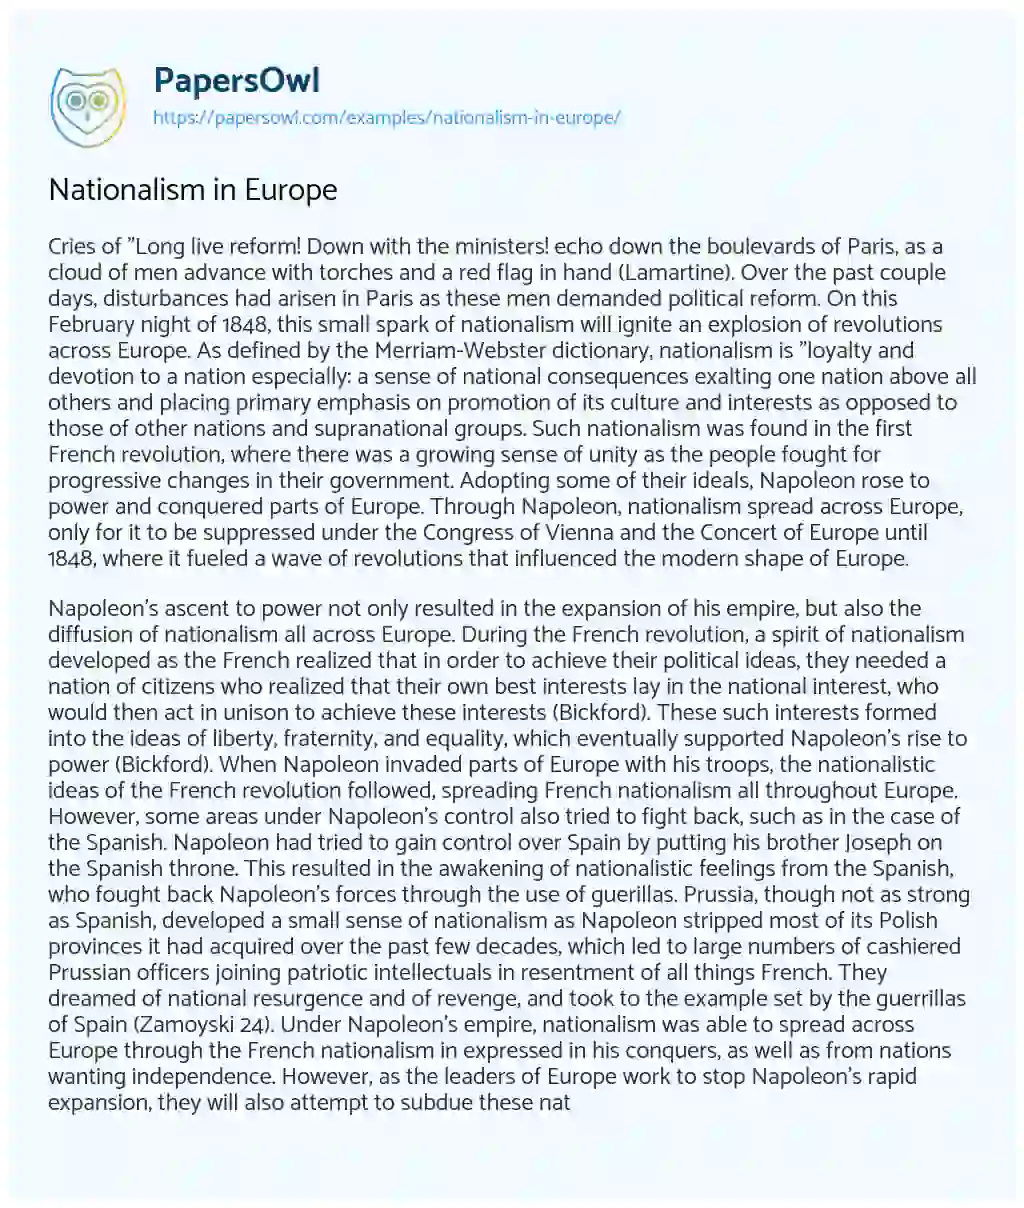 Nationalism in Europe essay